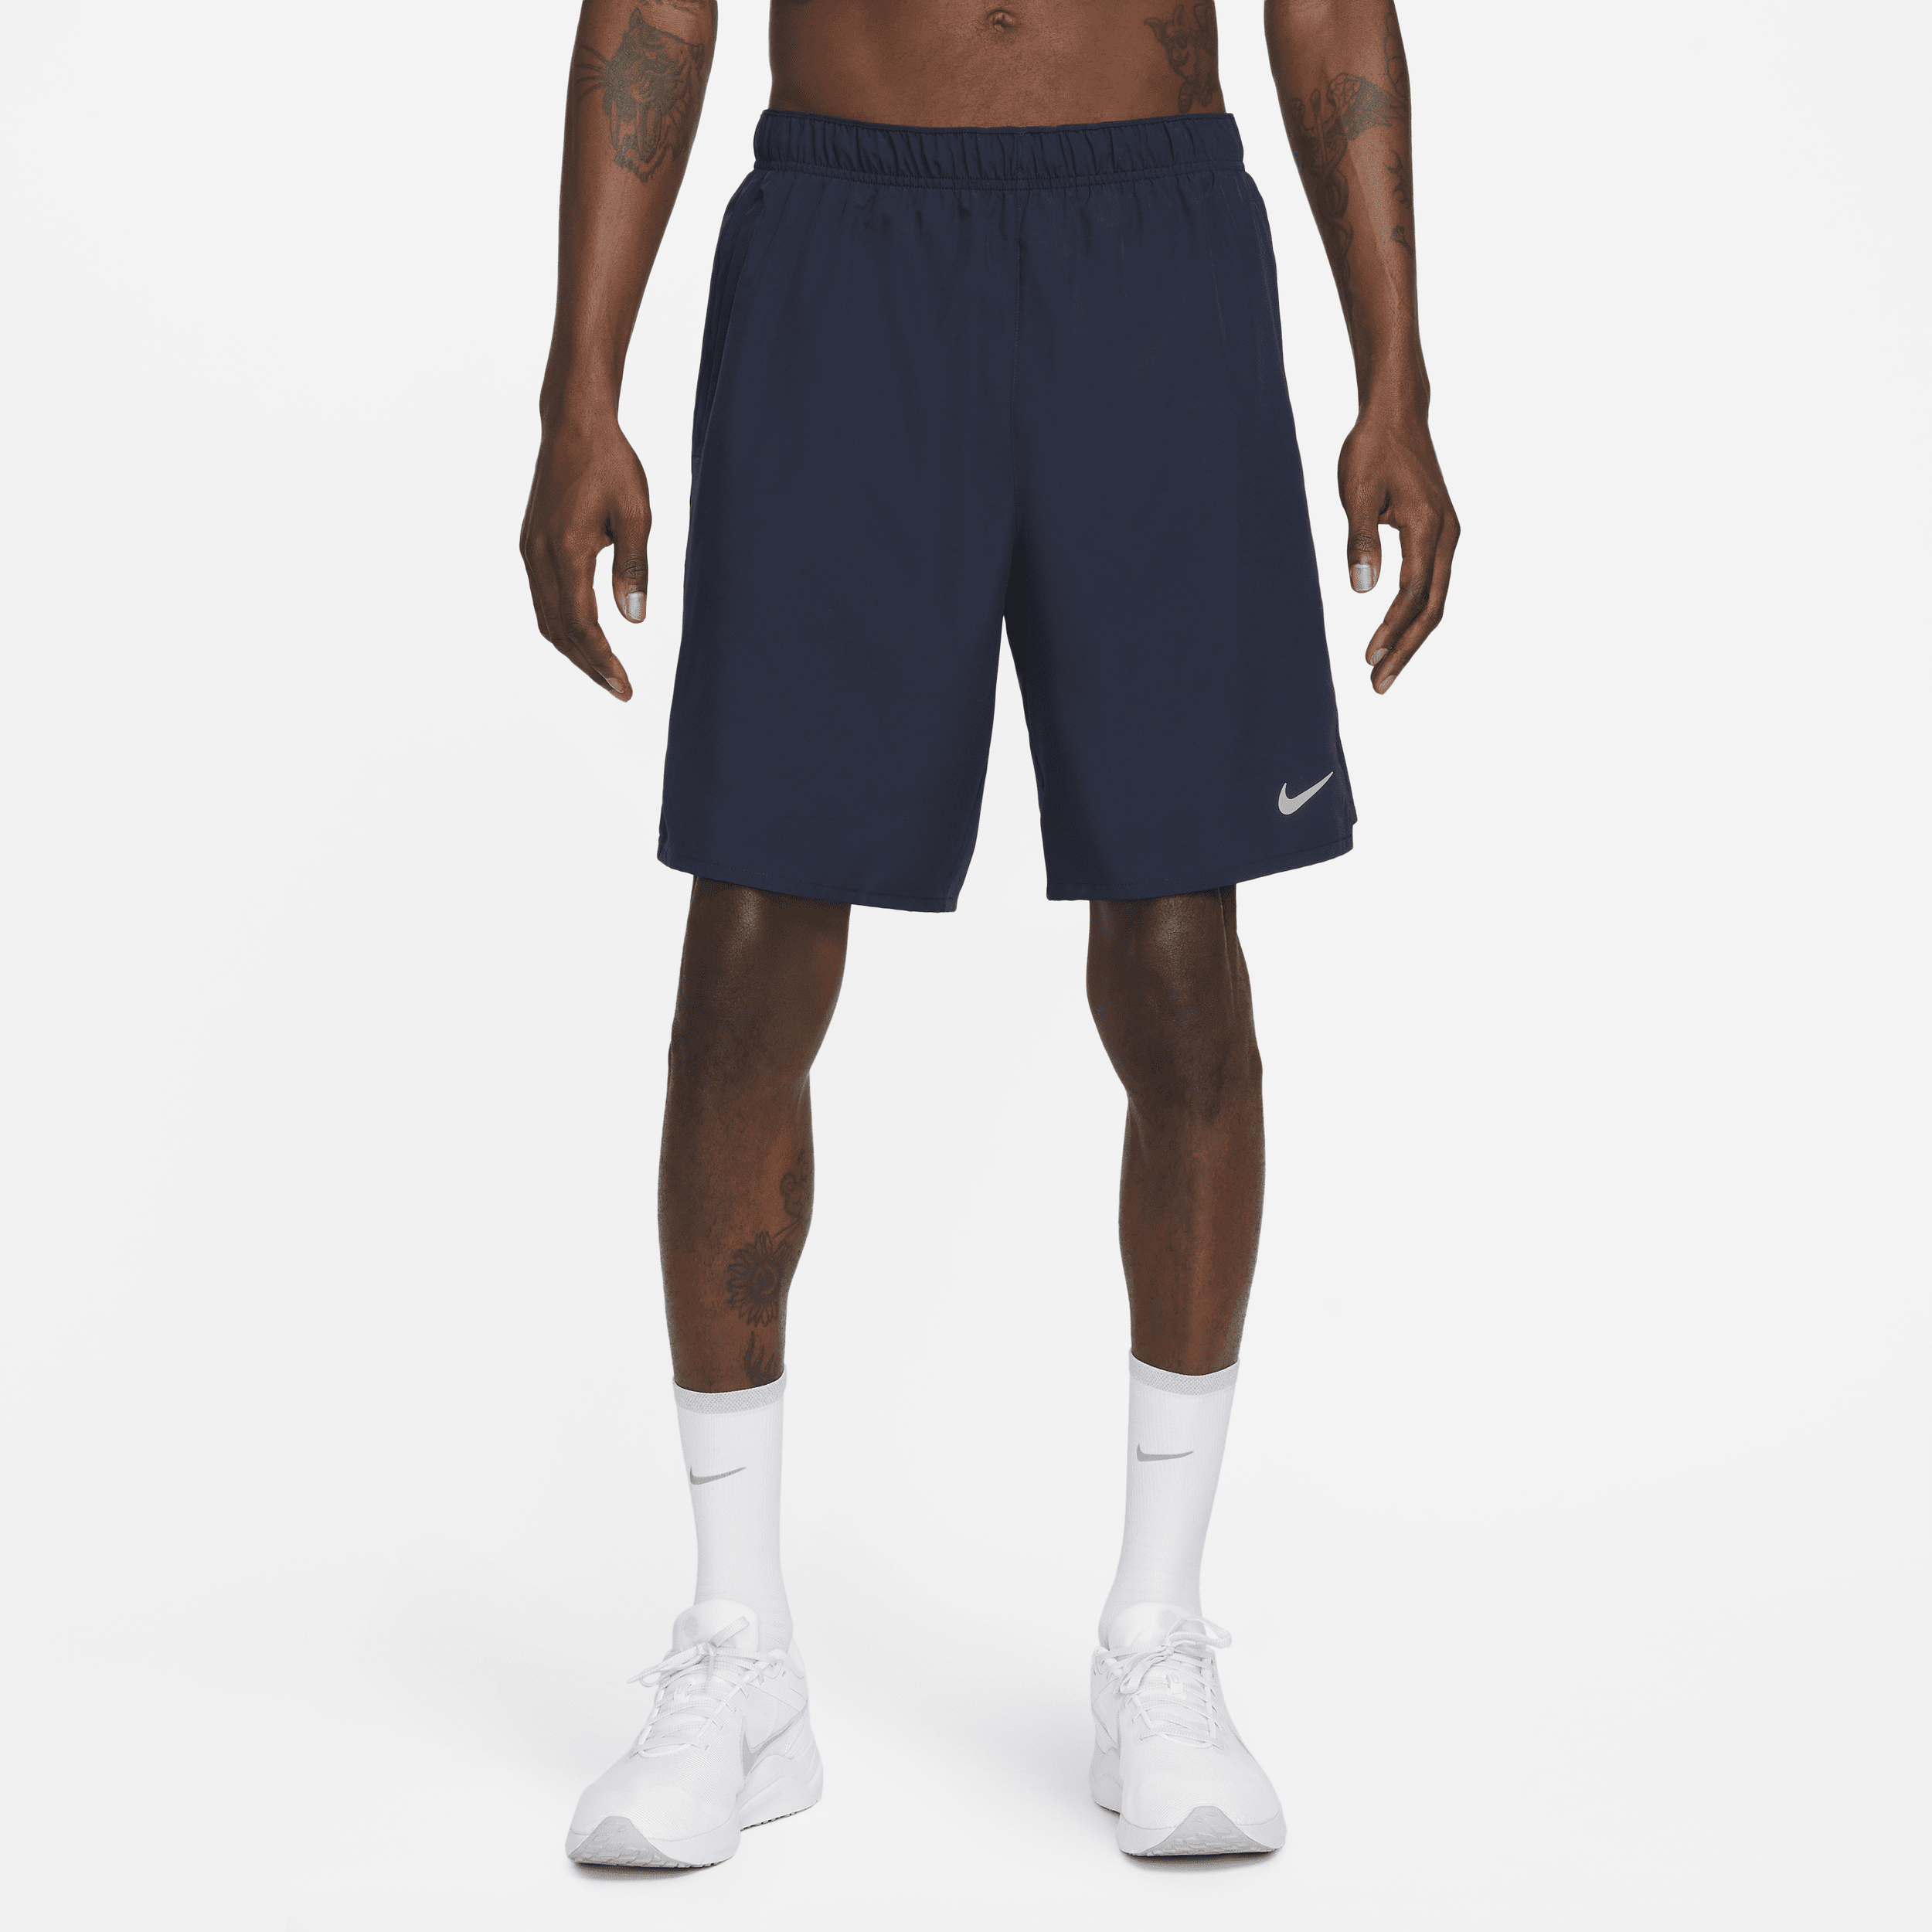 Shorts versatili non foderati Dri-FIT 23 cm Nike Challenger – Uomo - Blu